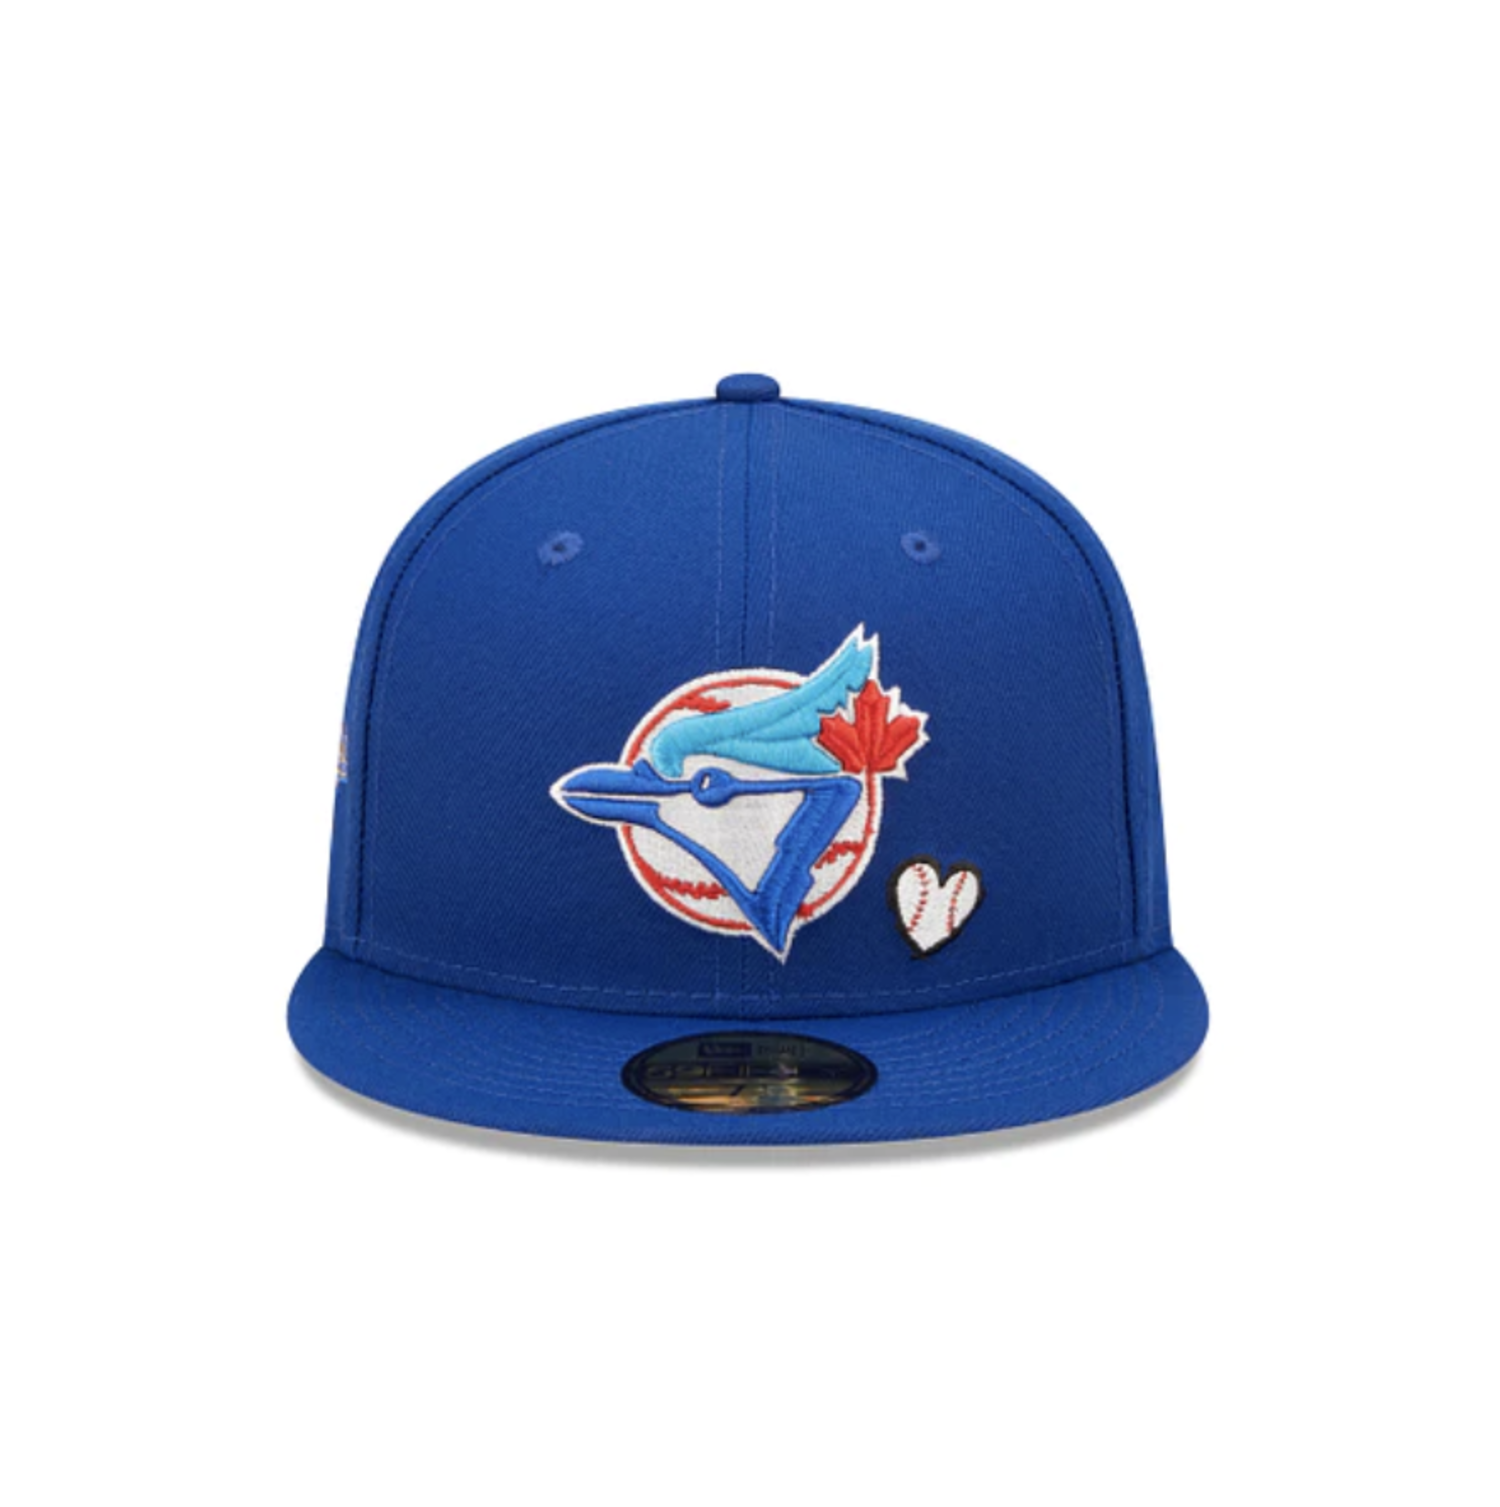 Accessories, Toronto Blue Jays New Era Snapback Hat